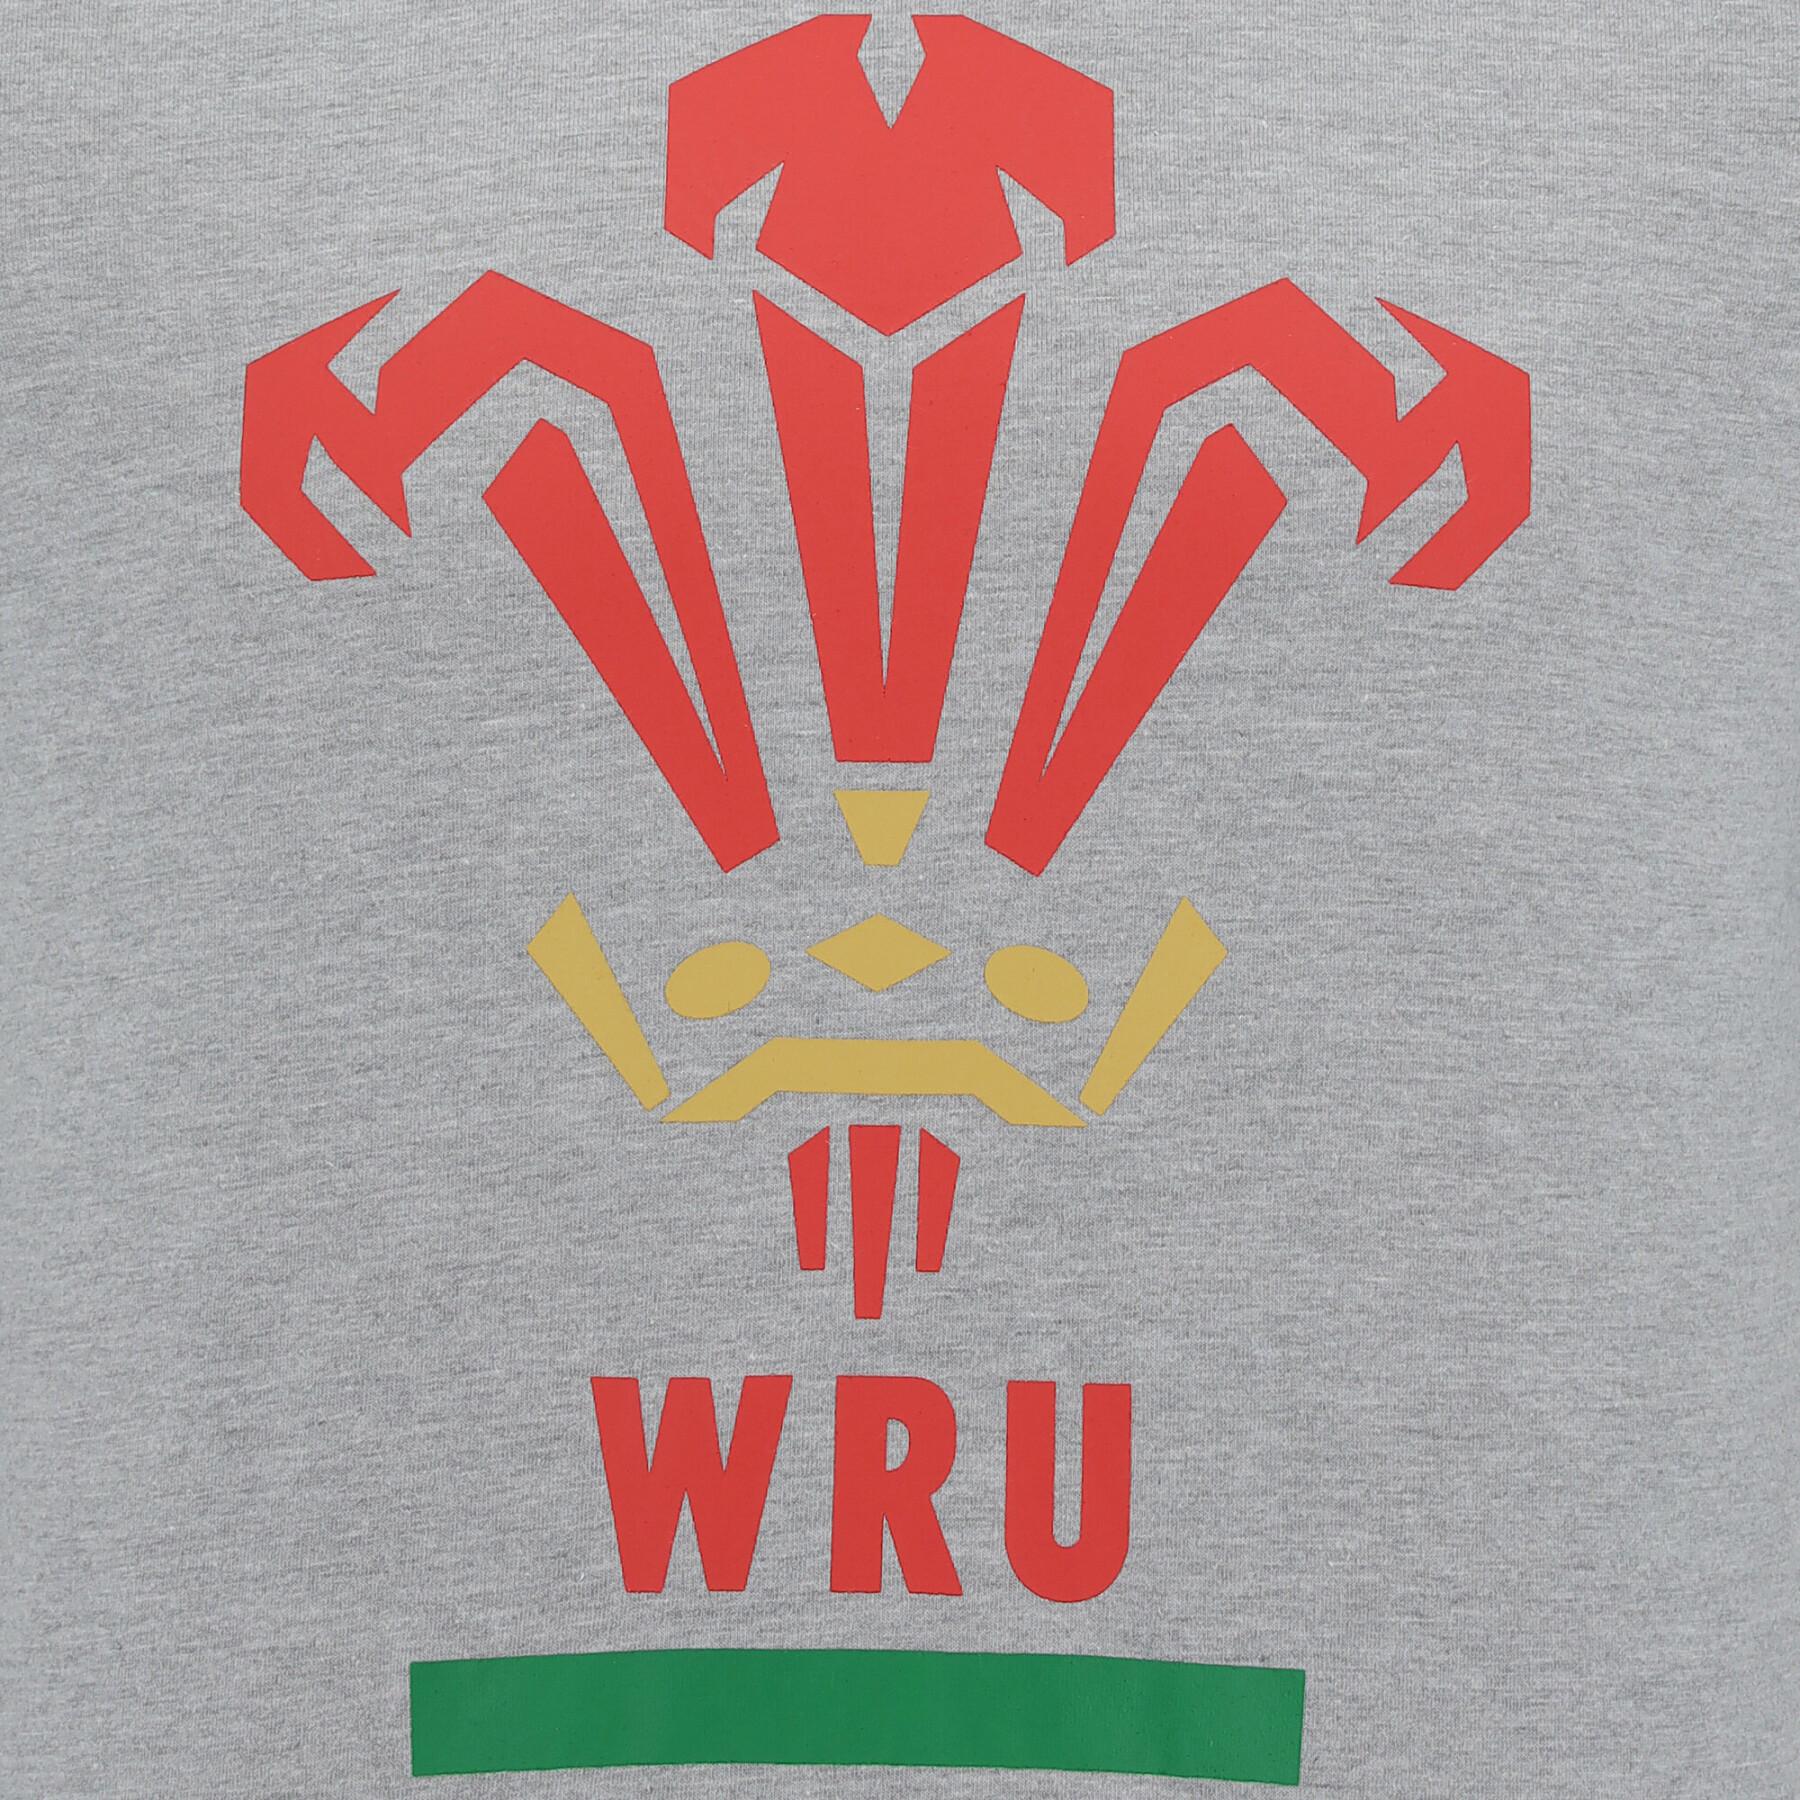 Cotton T-shirt Pays de Galles Rugby XV 2020/21